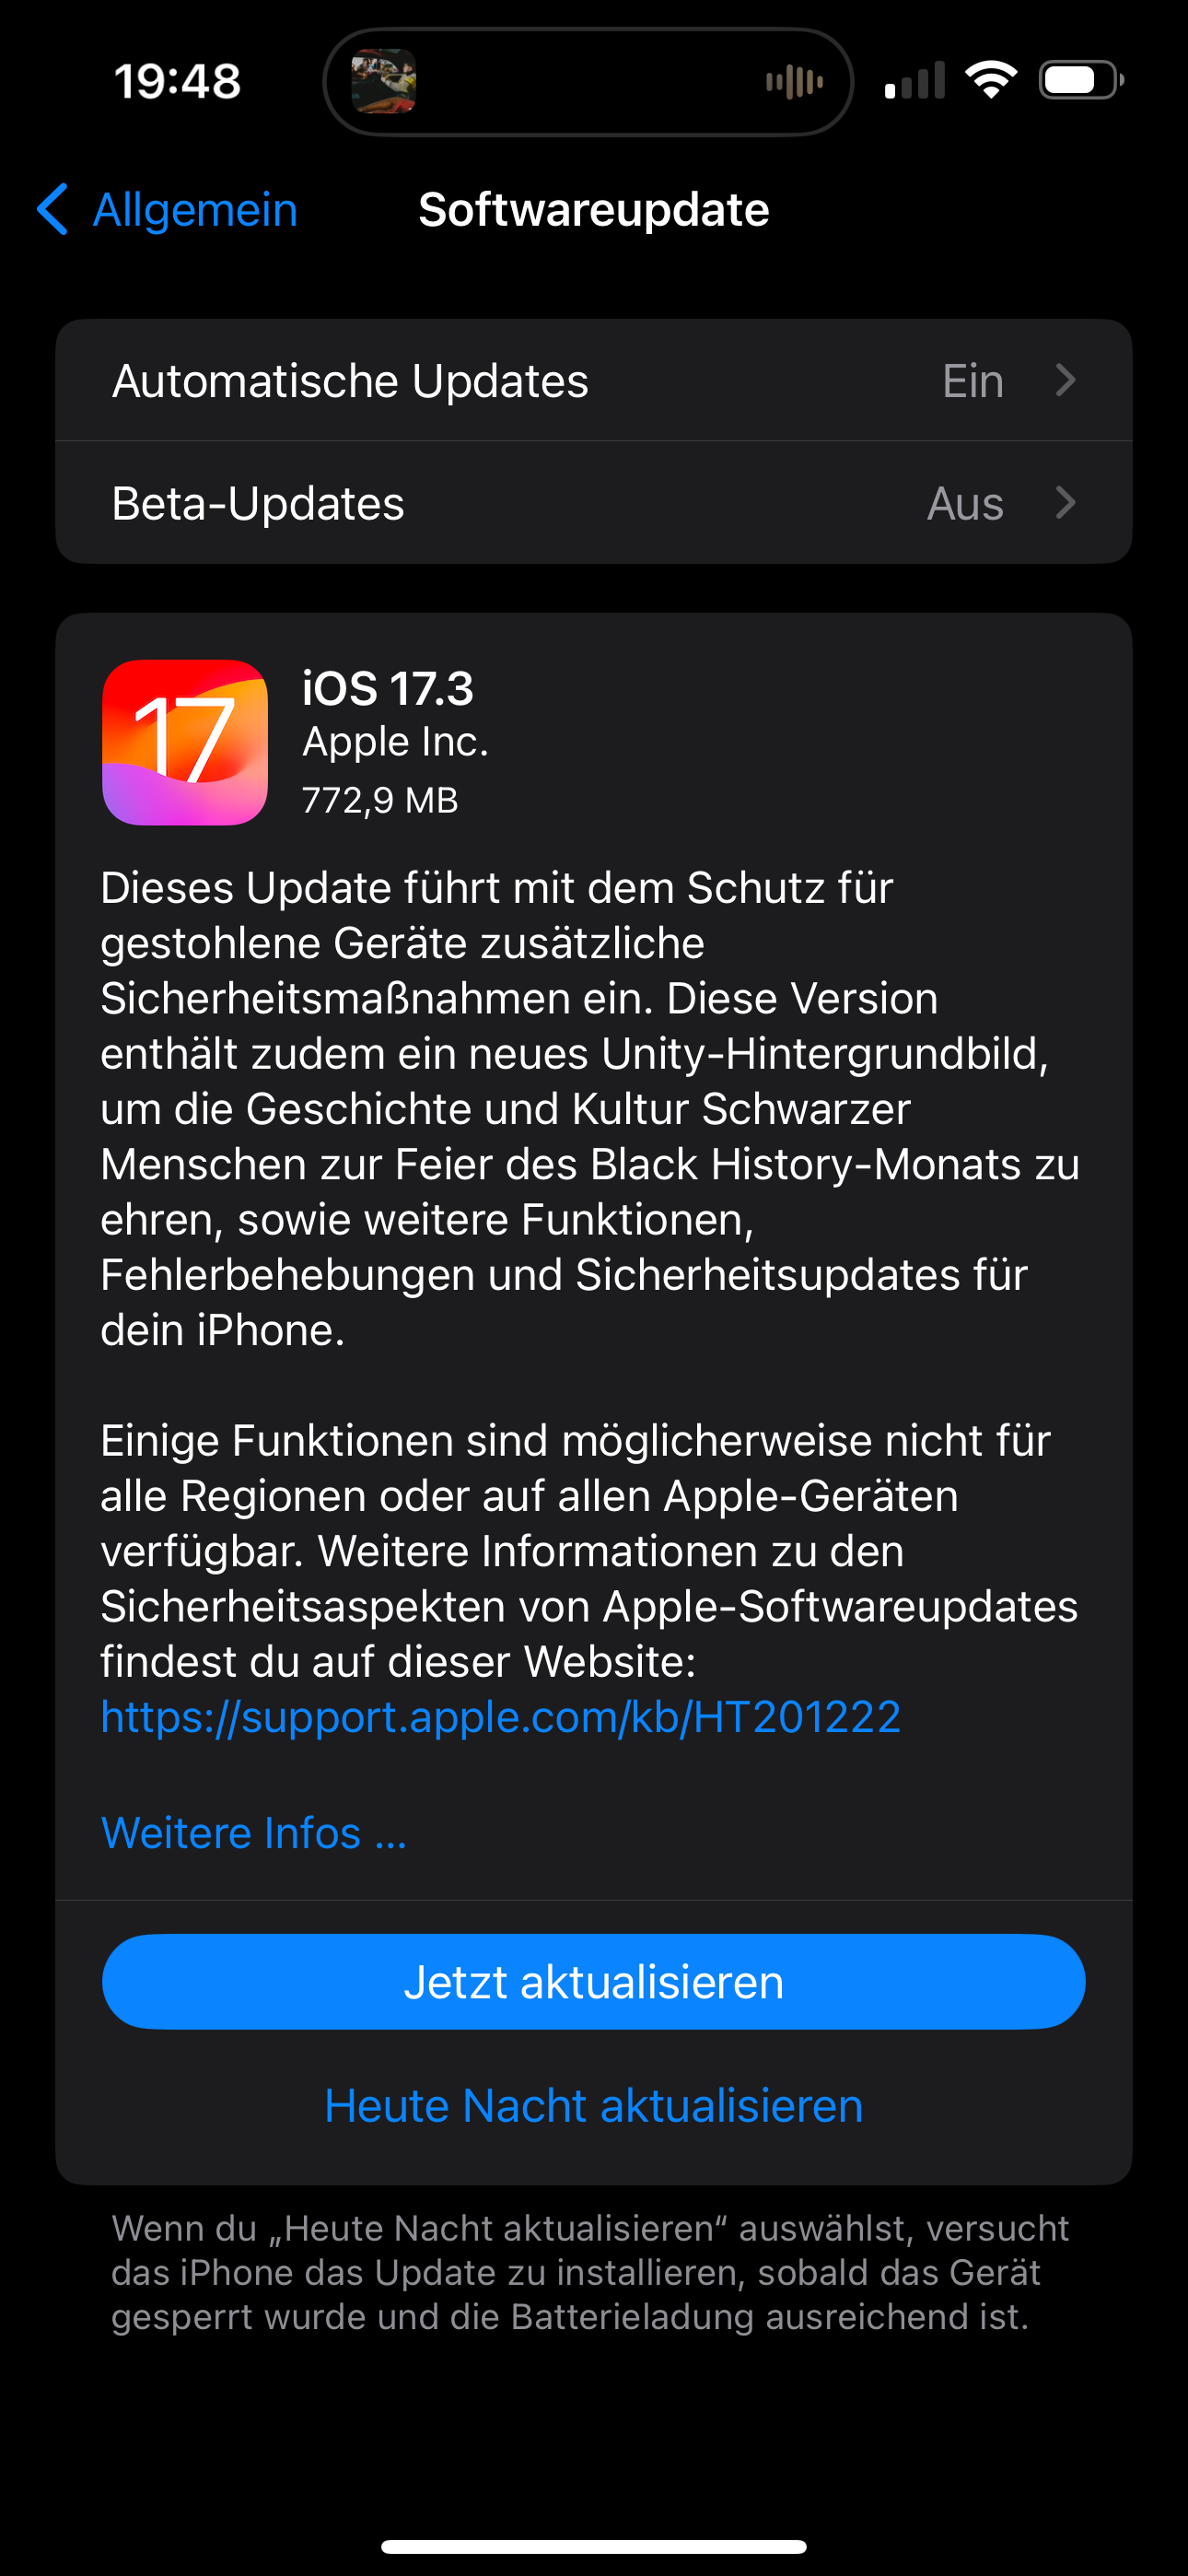 iOS 17.3 Changelog
